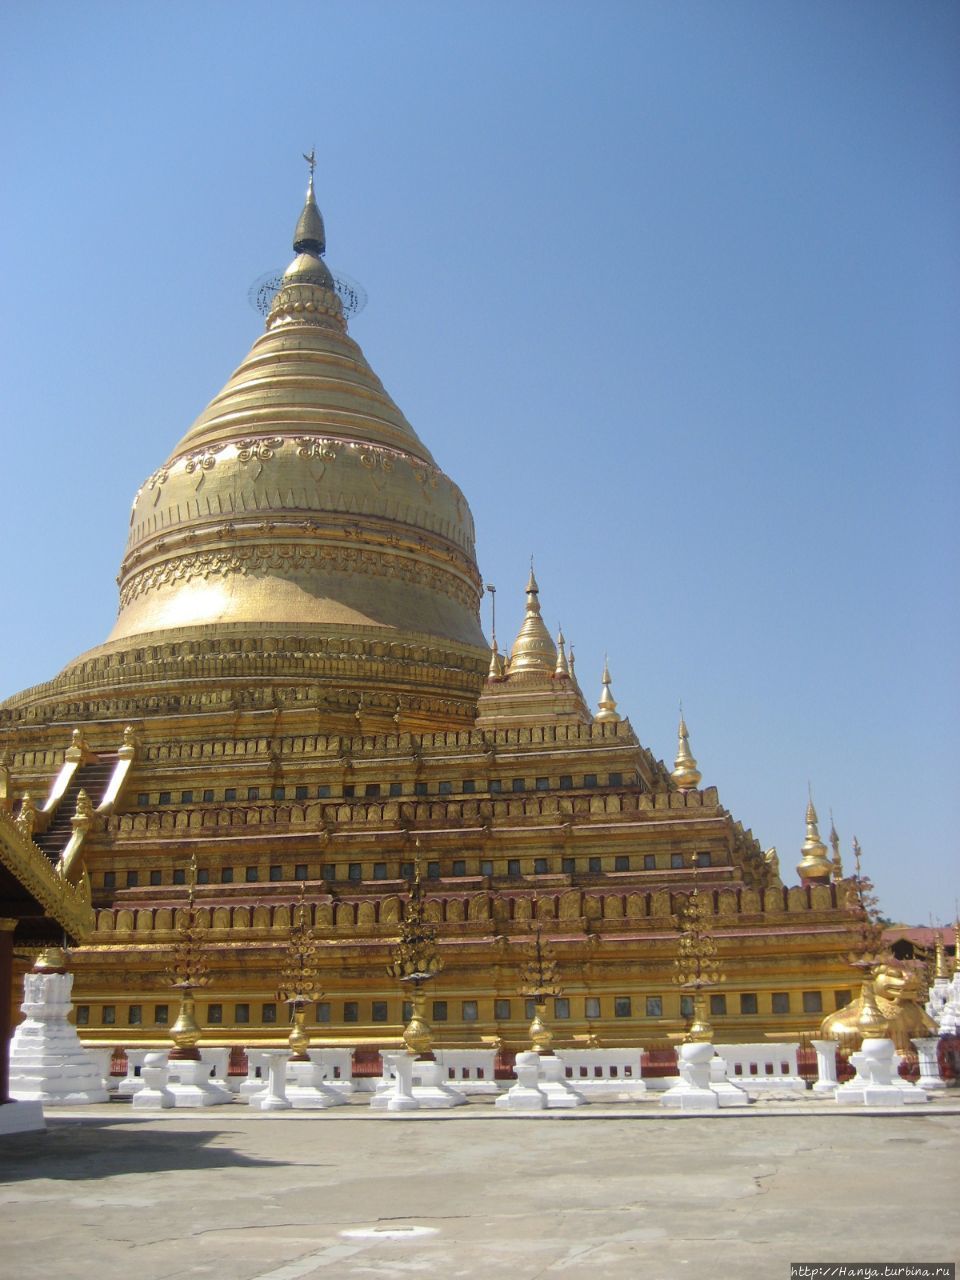 Пагода Швезигон Баган, Мьянма